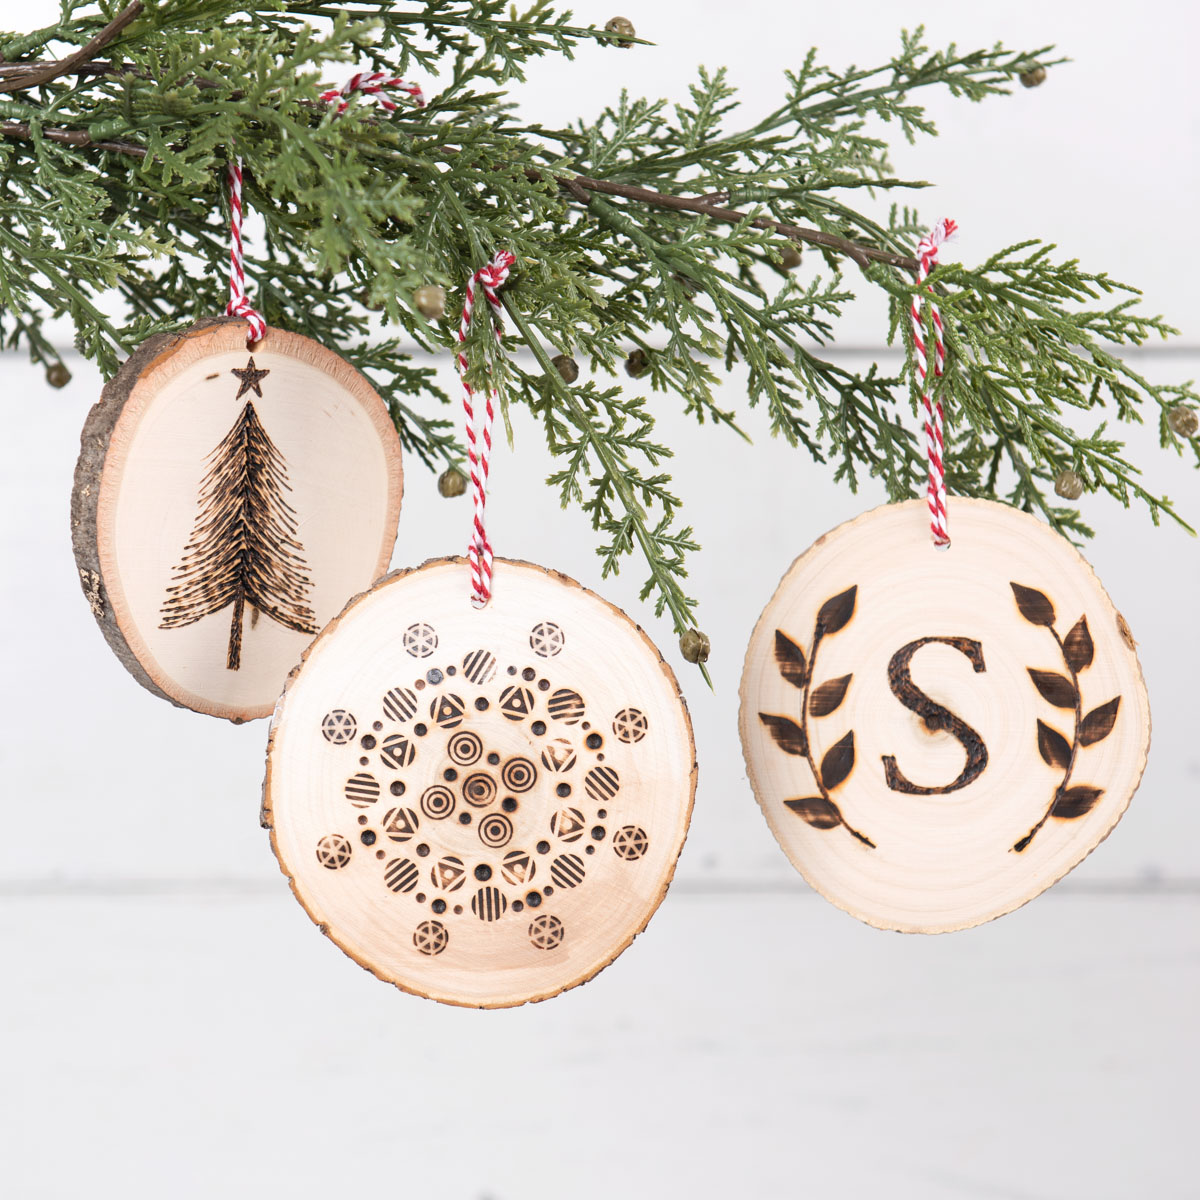 DIY Wood Burned Christmas Ornaments